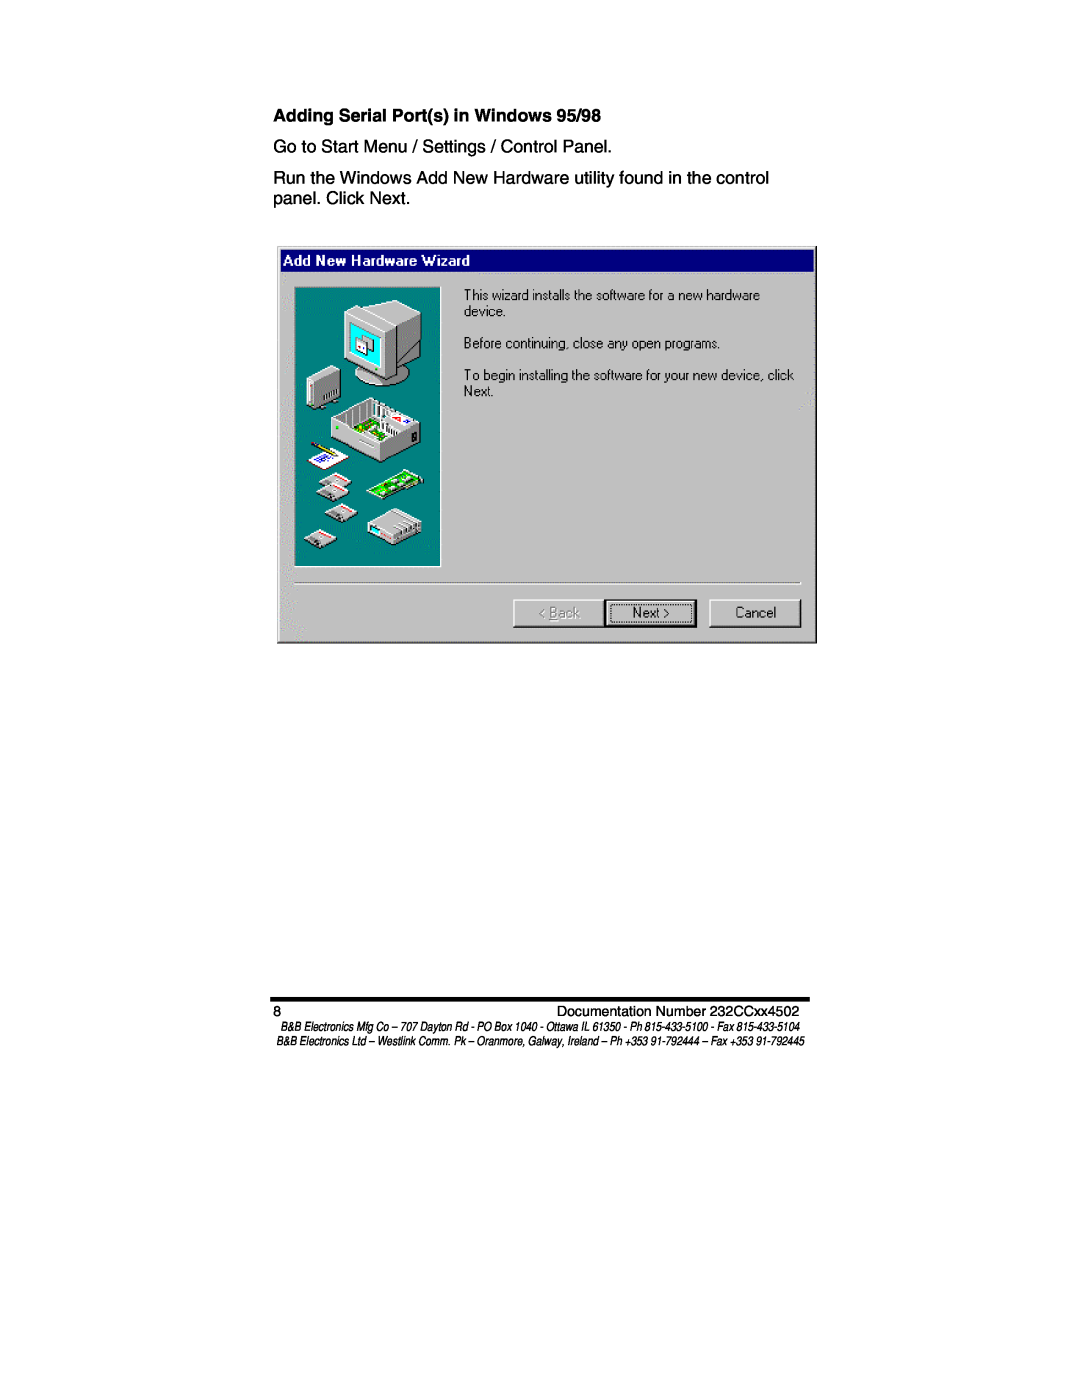 B&B Electronics 232CC2A, 232CC1B, 232CC2B Adding Serial Ports in Windows 95/98, Go to Start Menu / Settings / Control Panel 